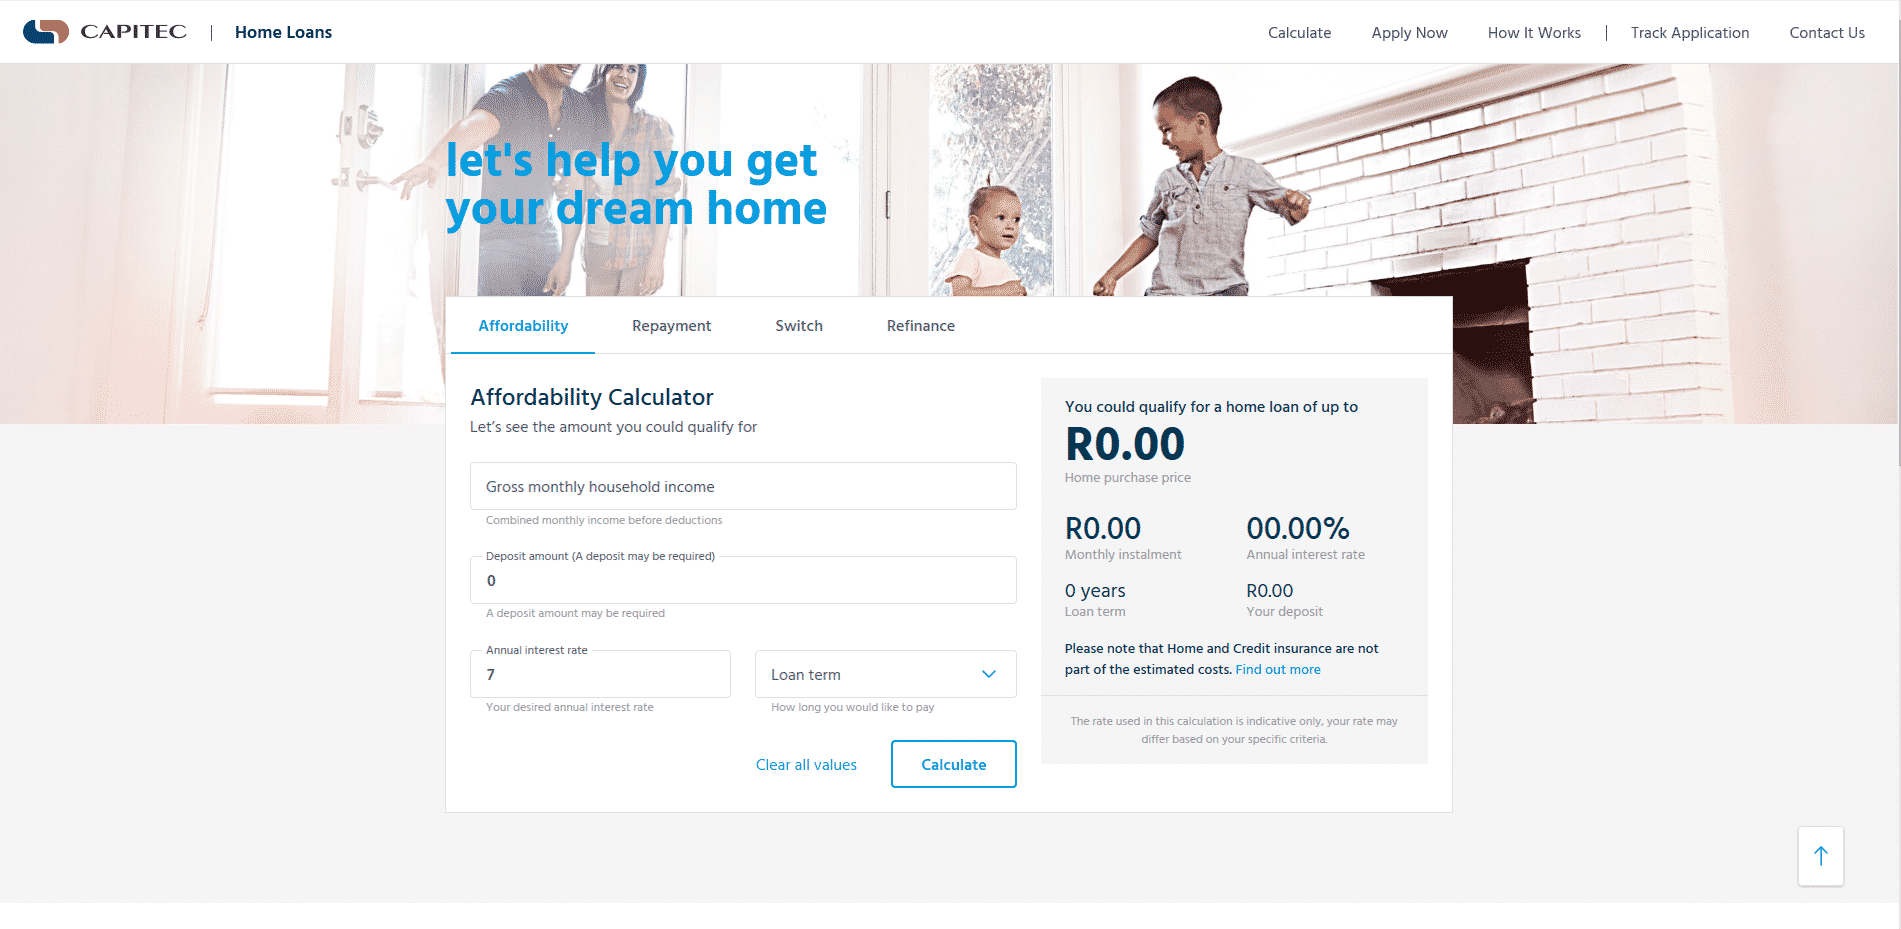 Home loans portal